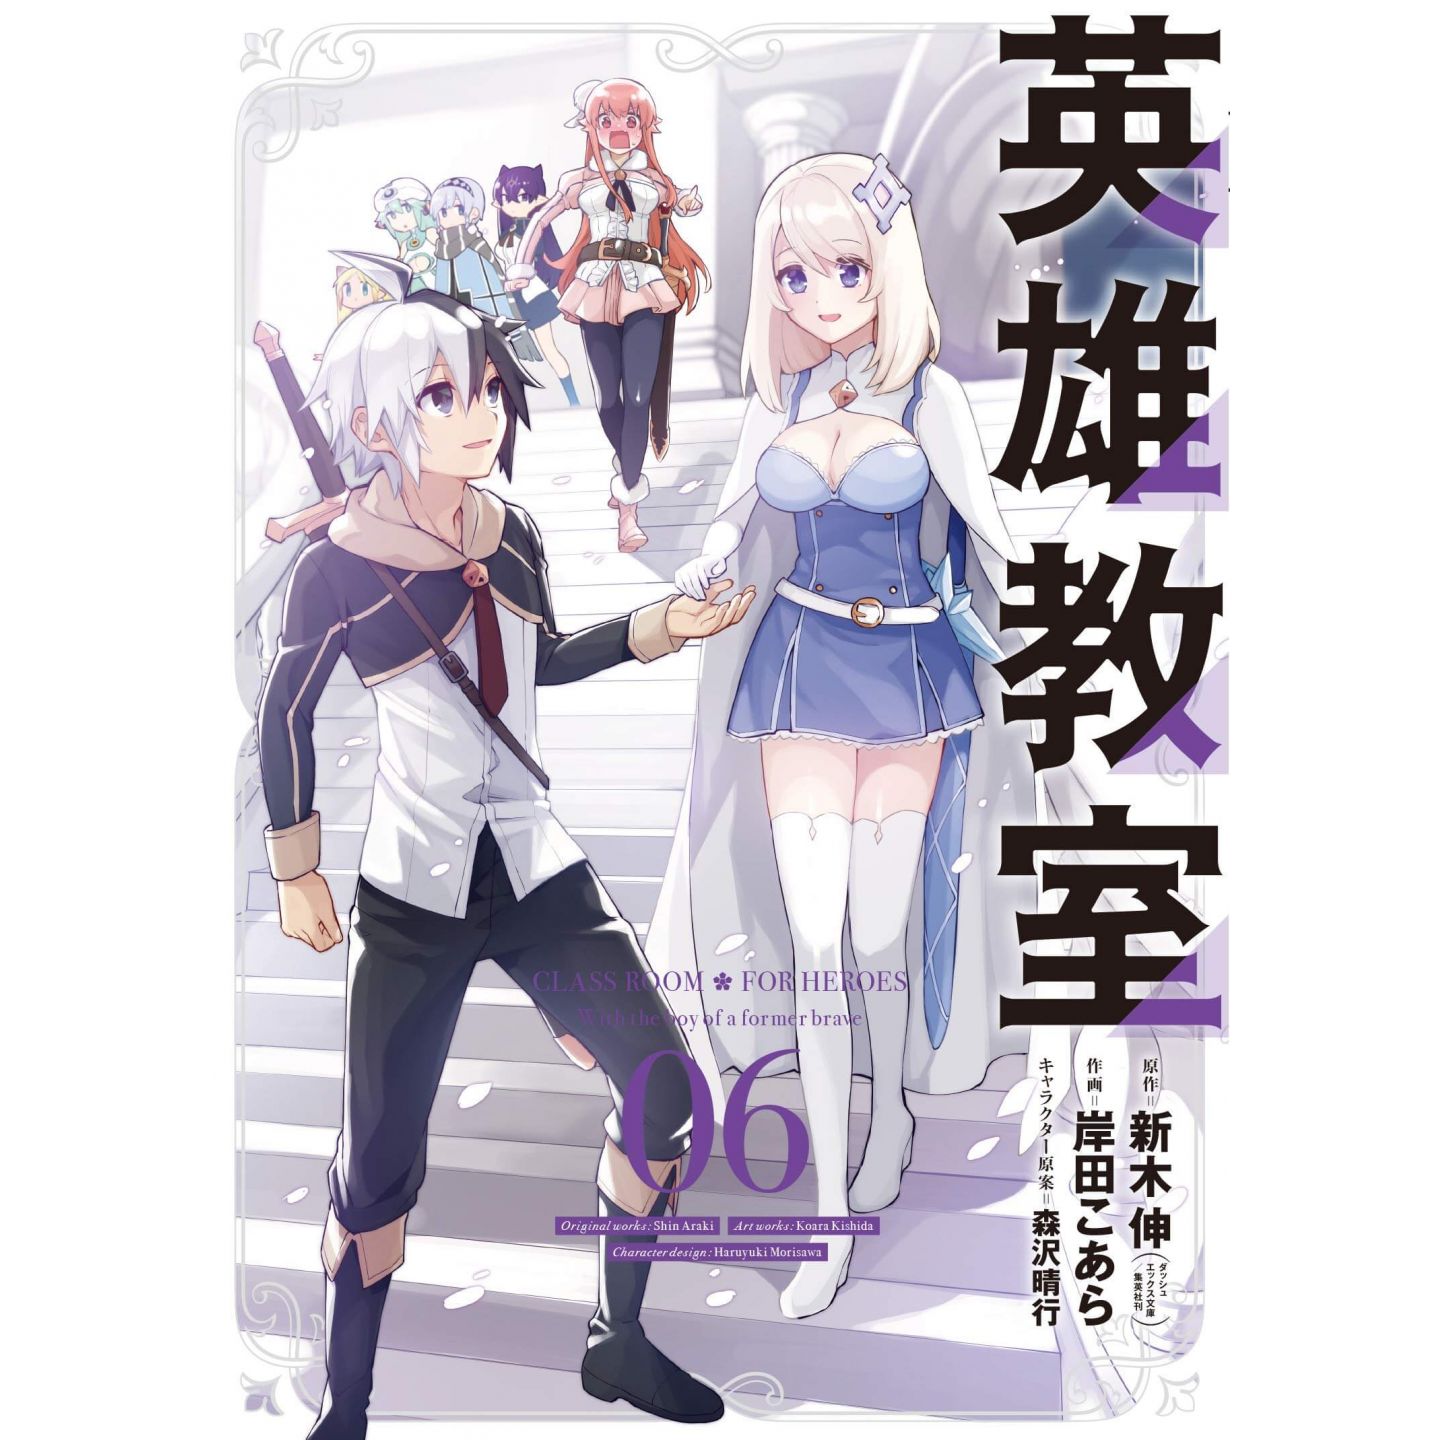  Eiyuu Kyoushitsu Poster Classroom for Heroes Anime